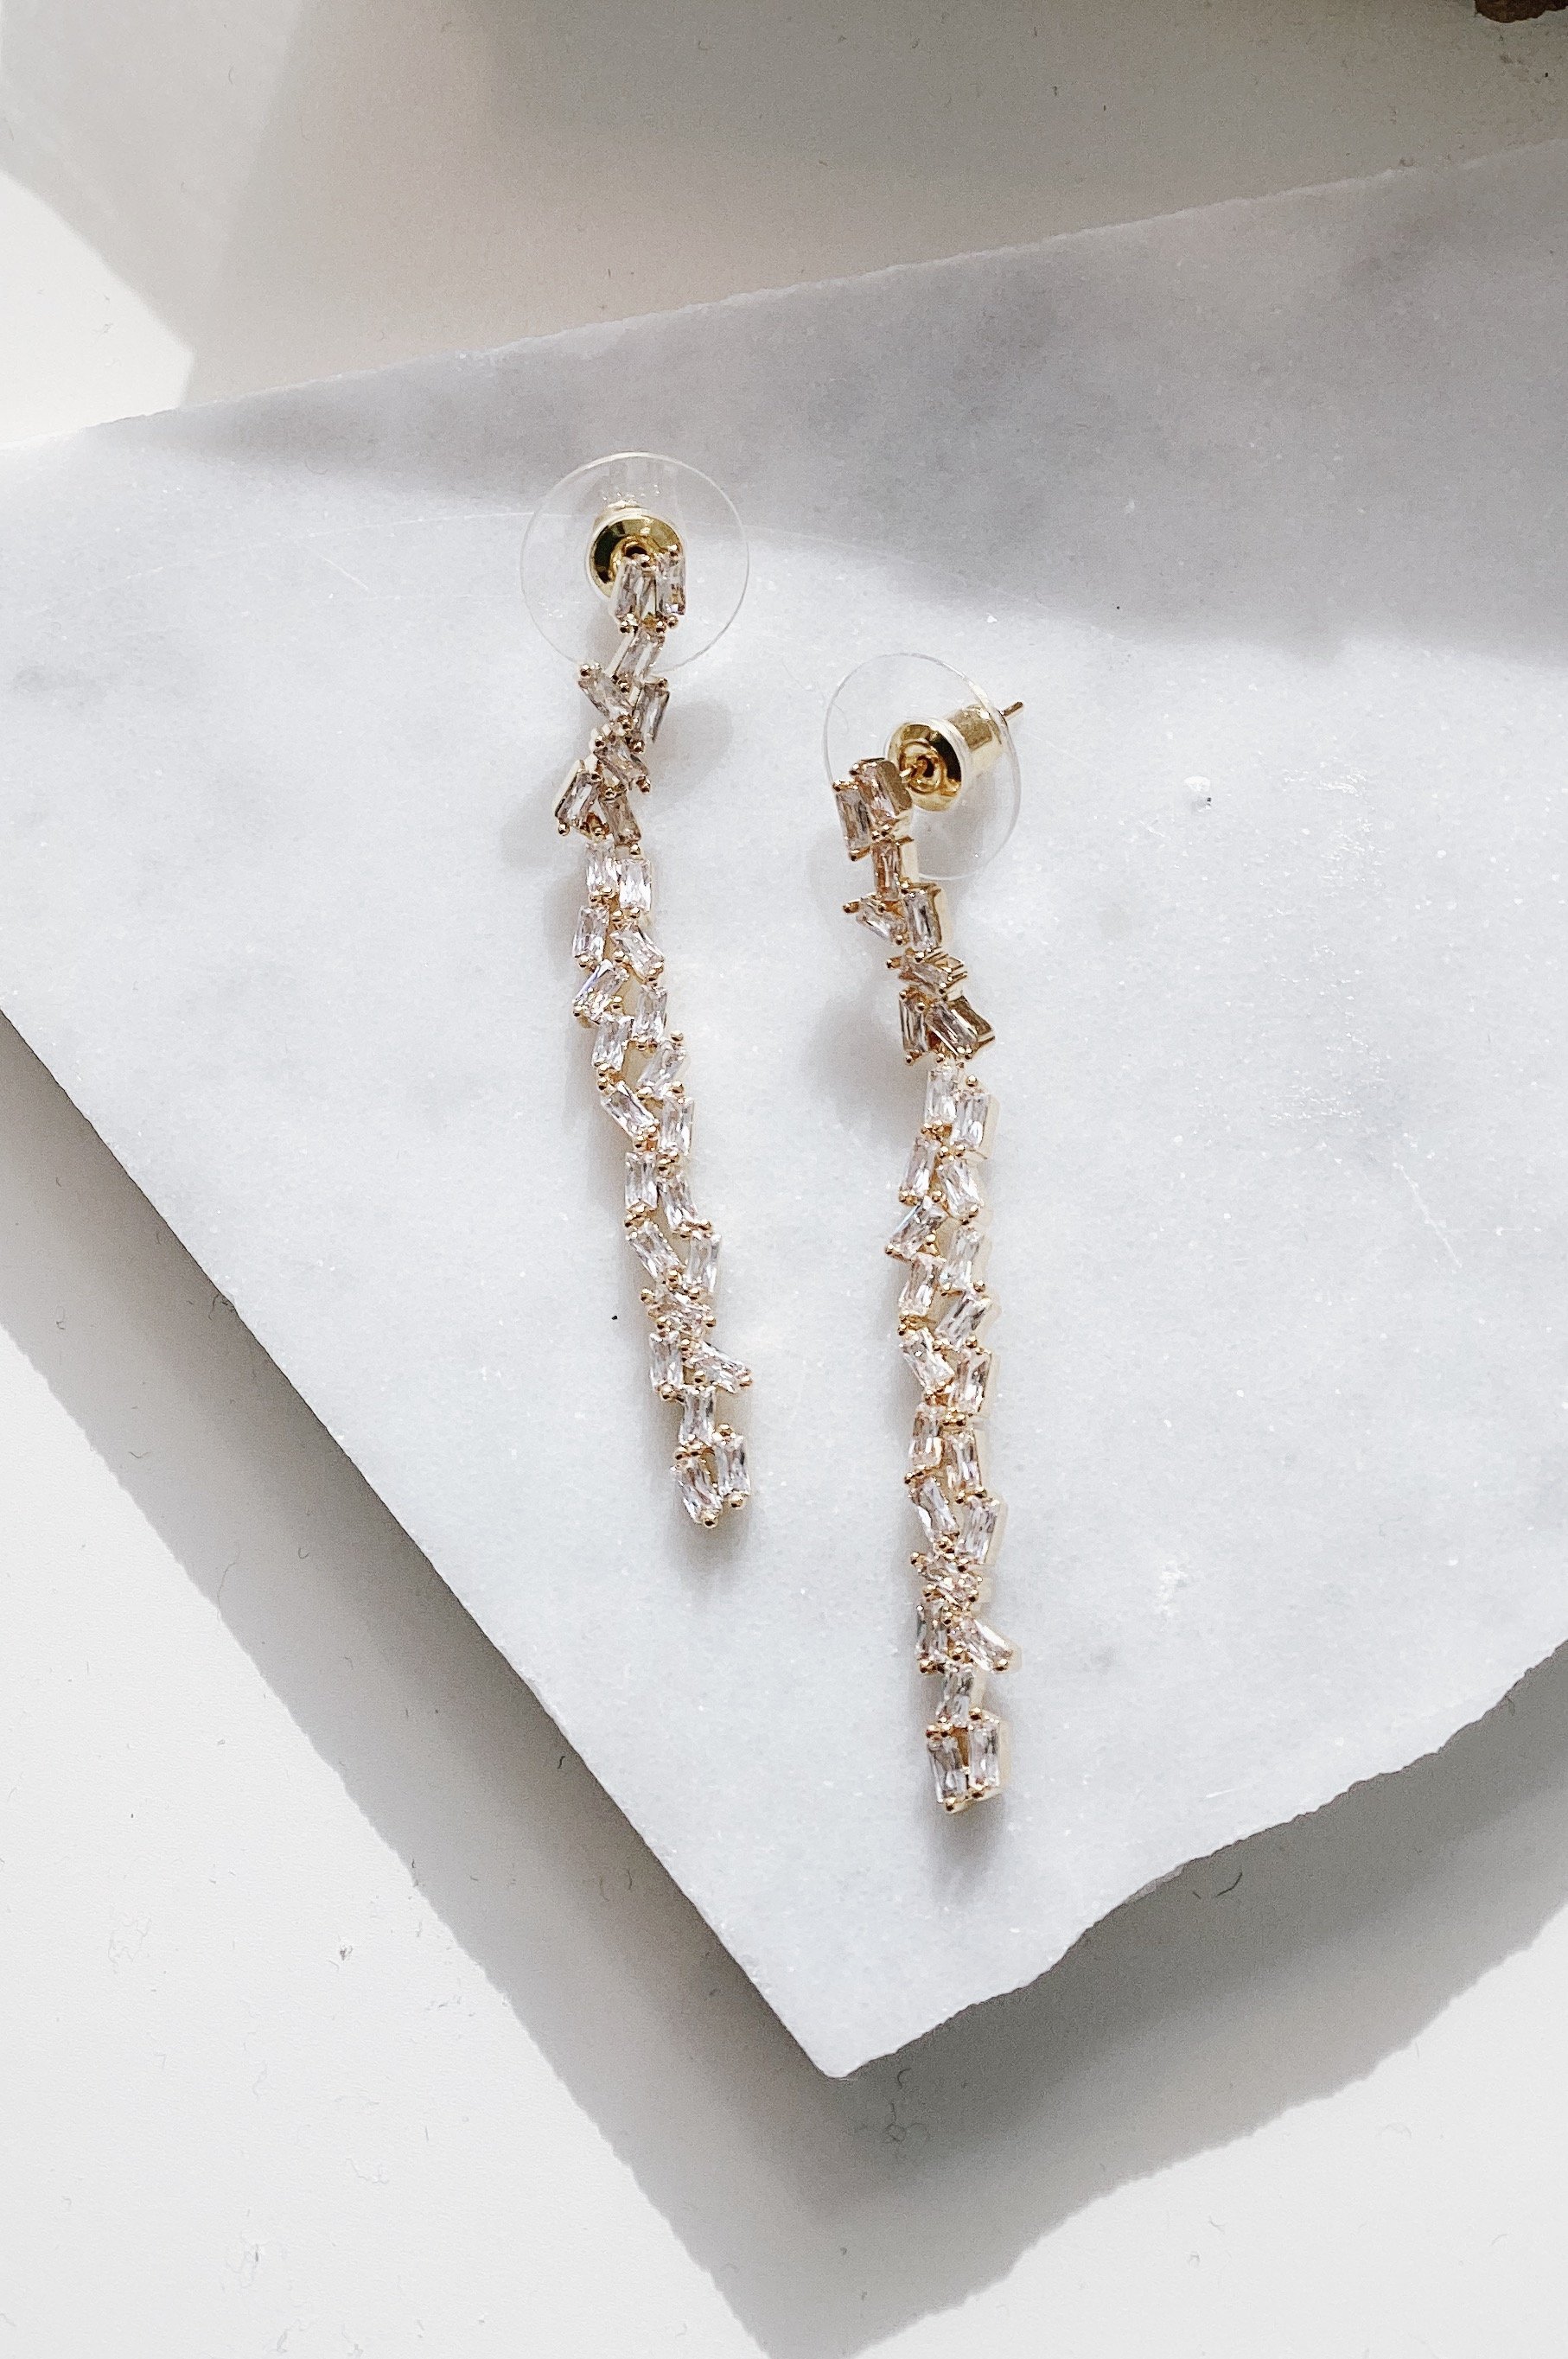 Anthropologie White Gold Fashion Earrings for sale  eBay